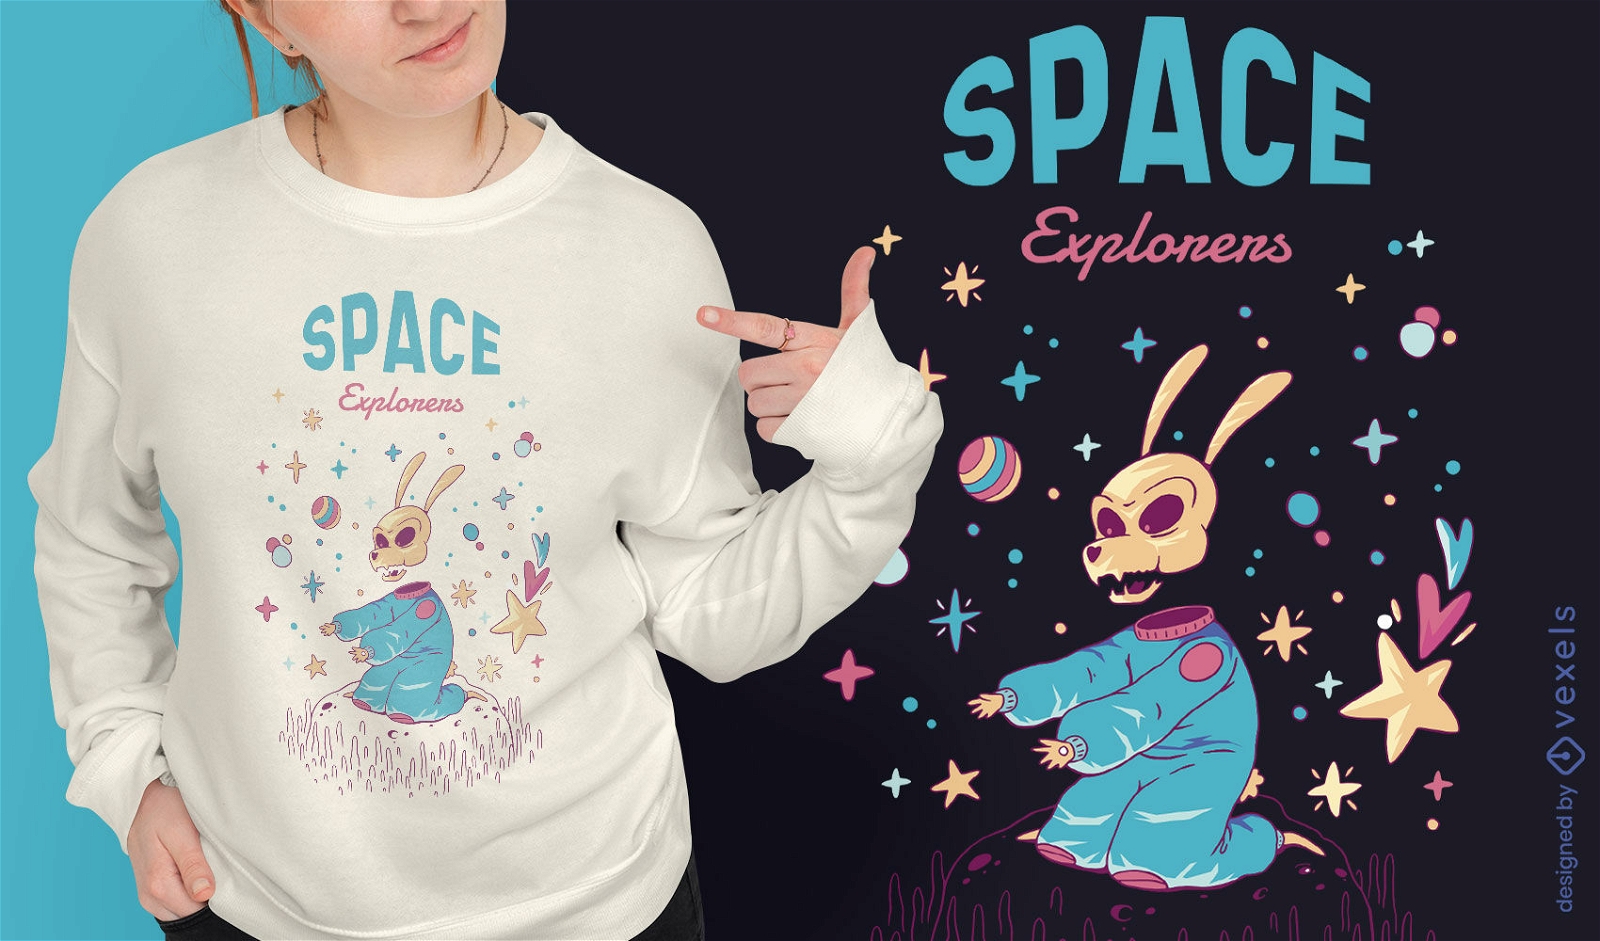 Space explorers skeleton rabbit t-shirt design